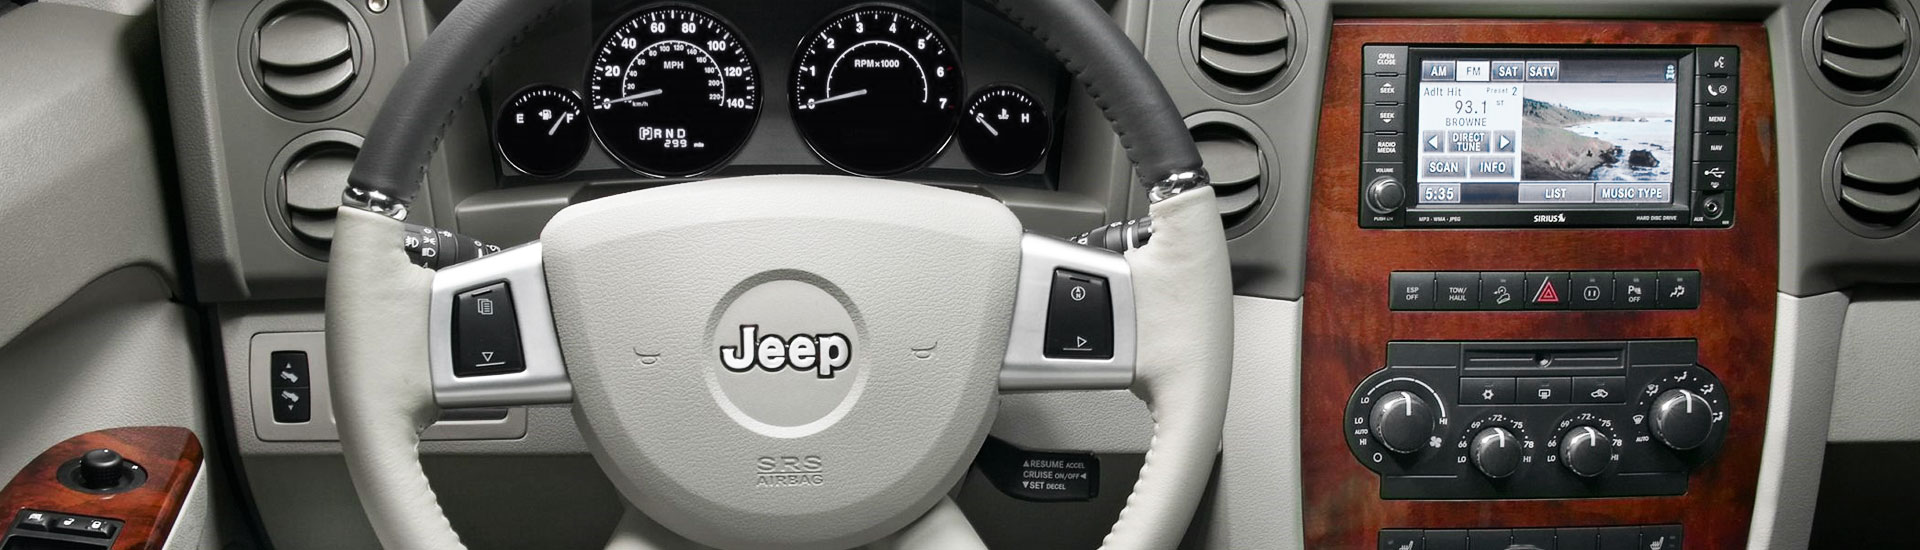 2011 Jeep Patriot Custom Dash Kits